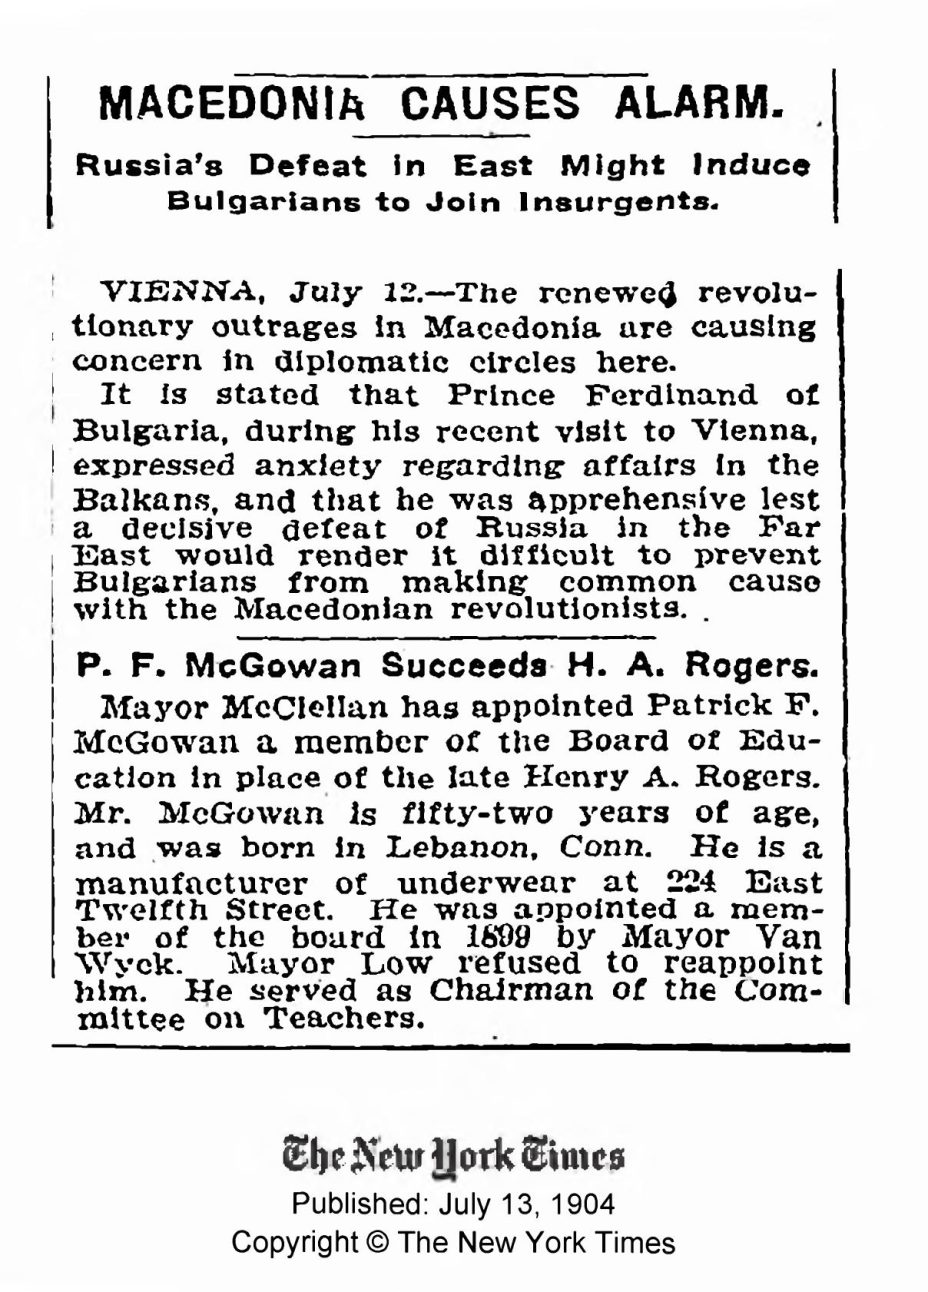 1904.07.13_The New York Times - Macedonia causes alarm